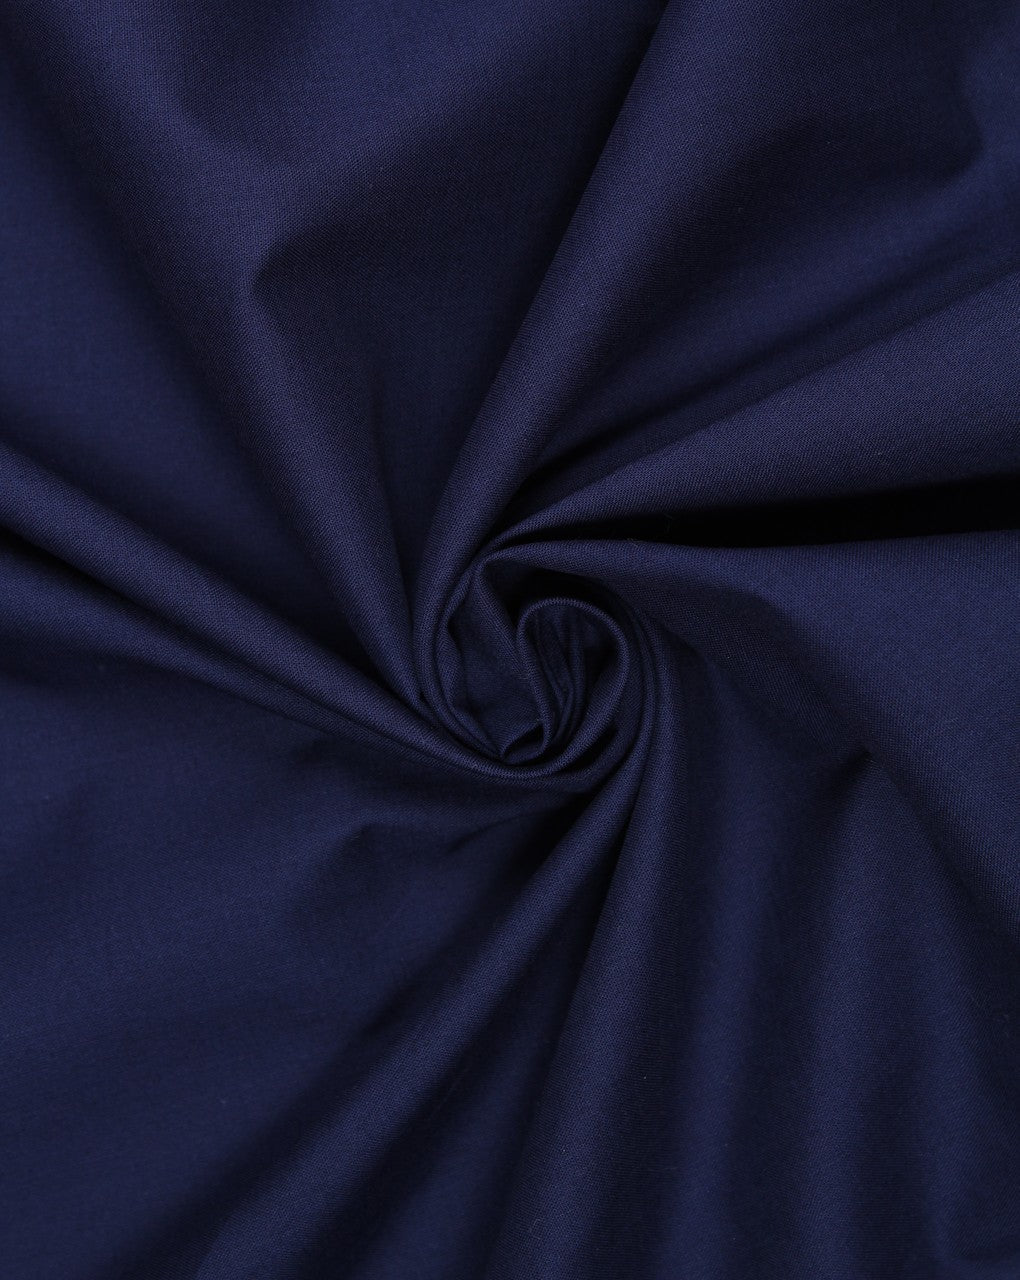 Plain Blue Cotton Cambric Fabric